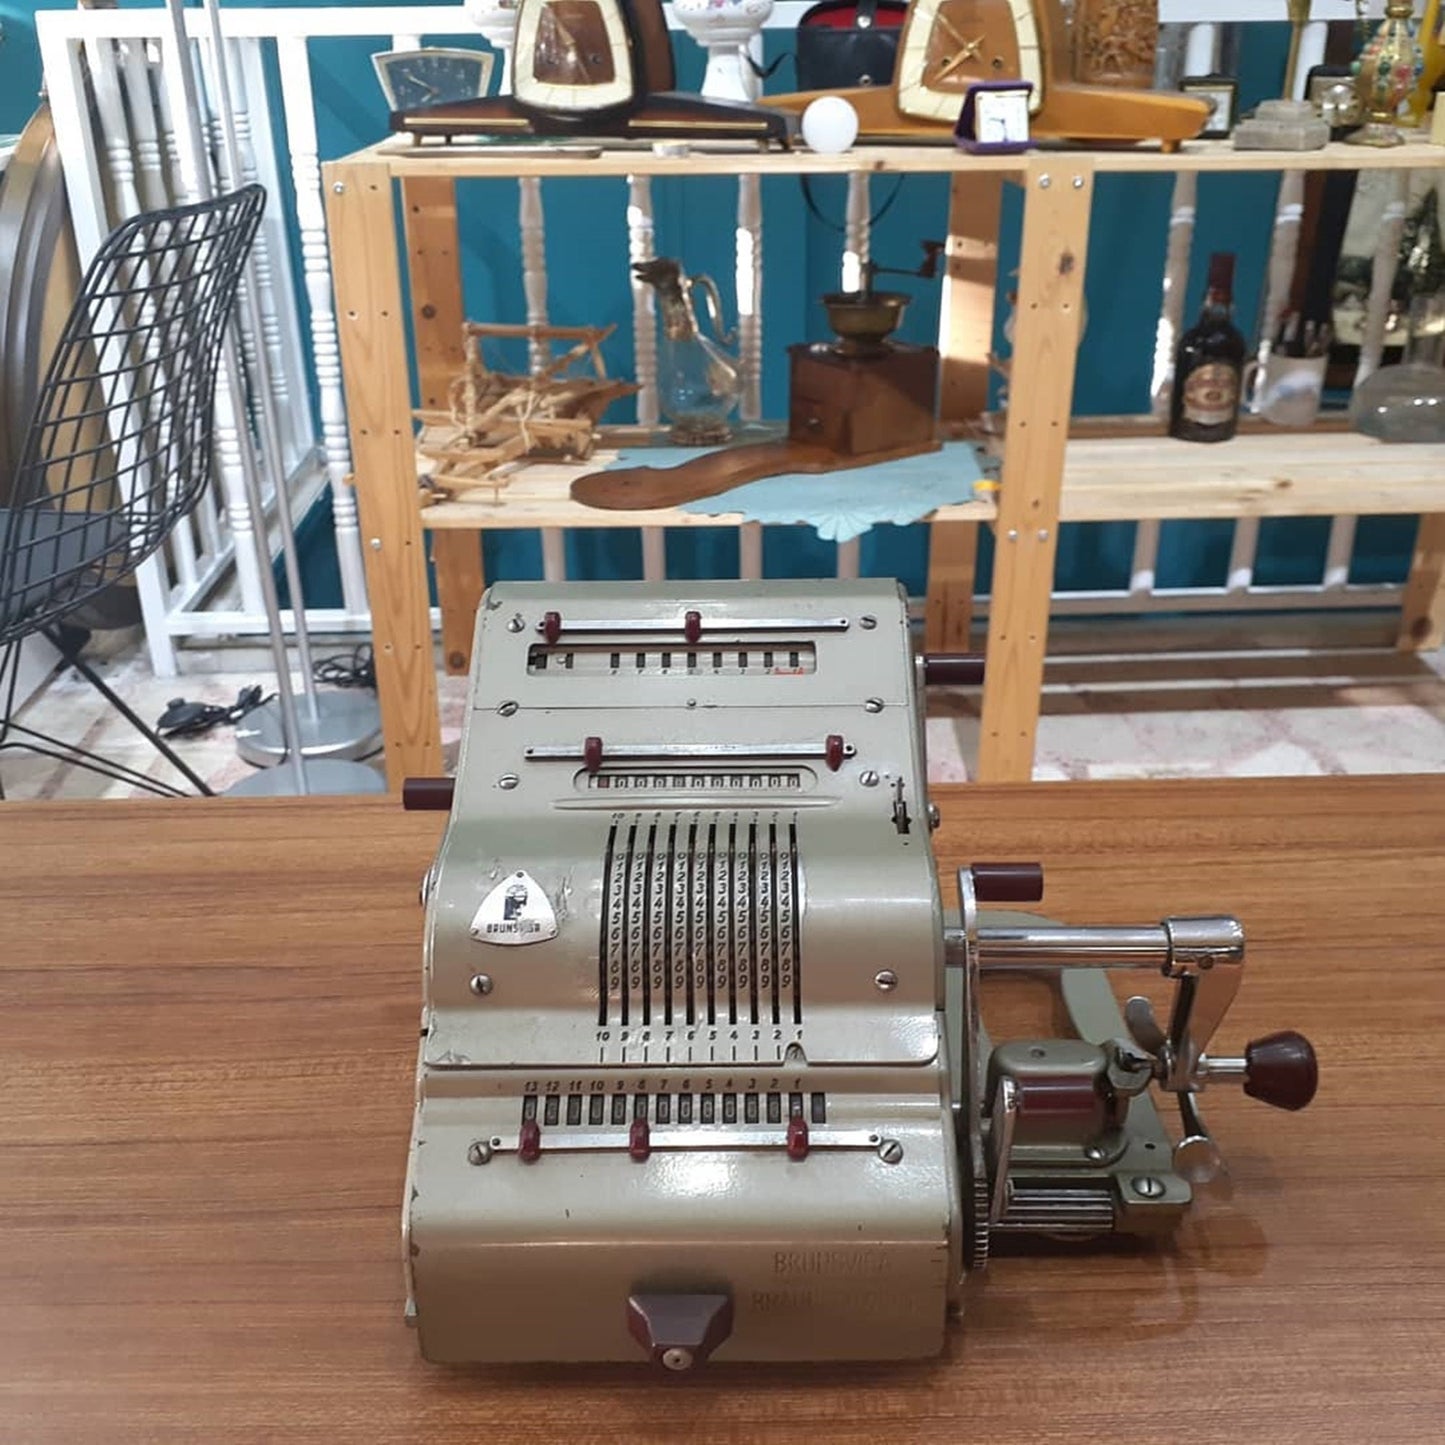 Brunsviga Vintage Calculator - Antique Mechanical Adding Machine - Retro Office Decor - Classic Desk Collectible